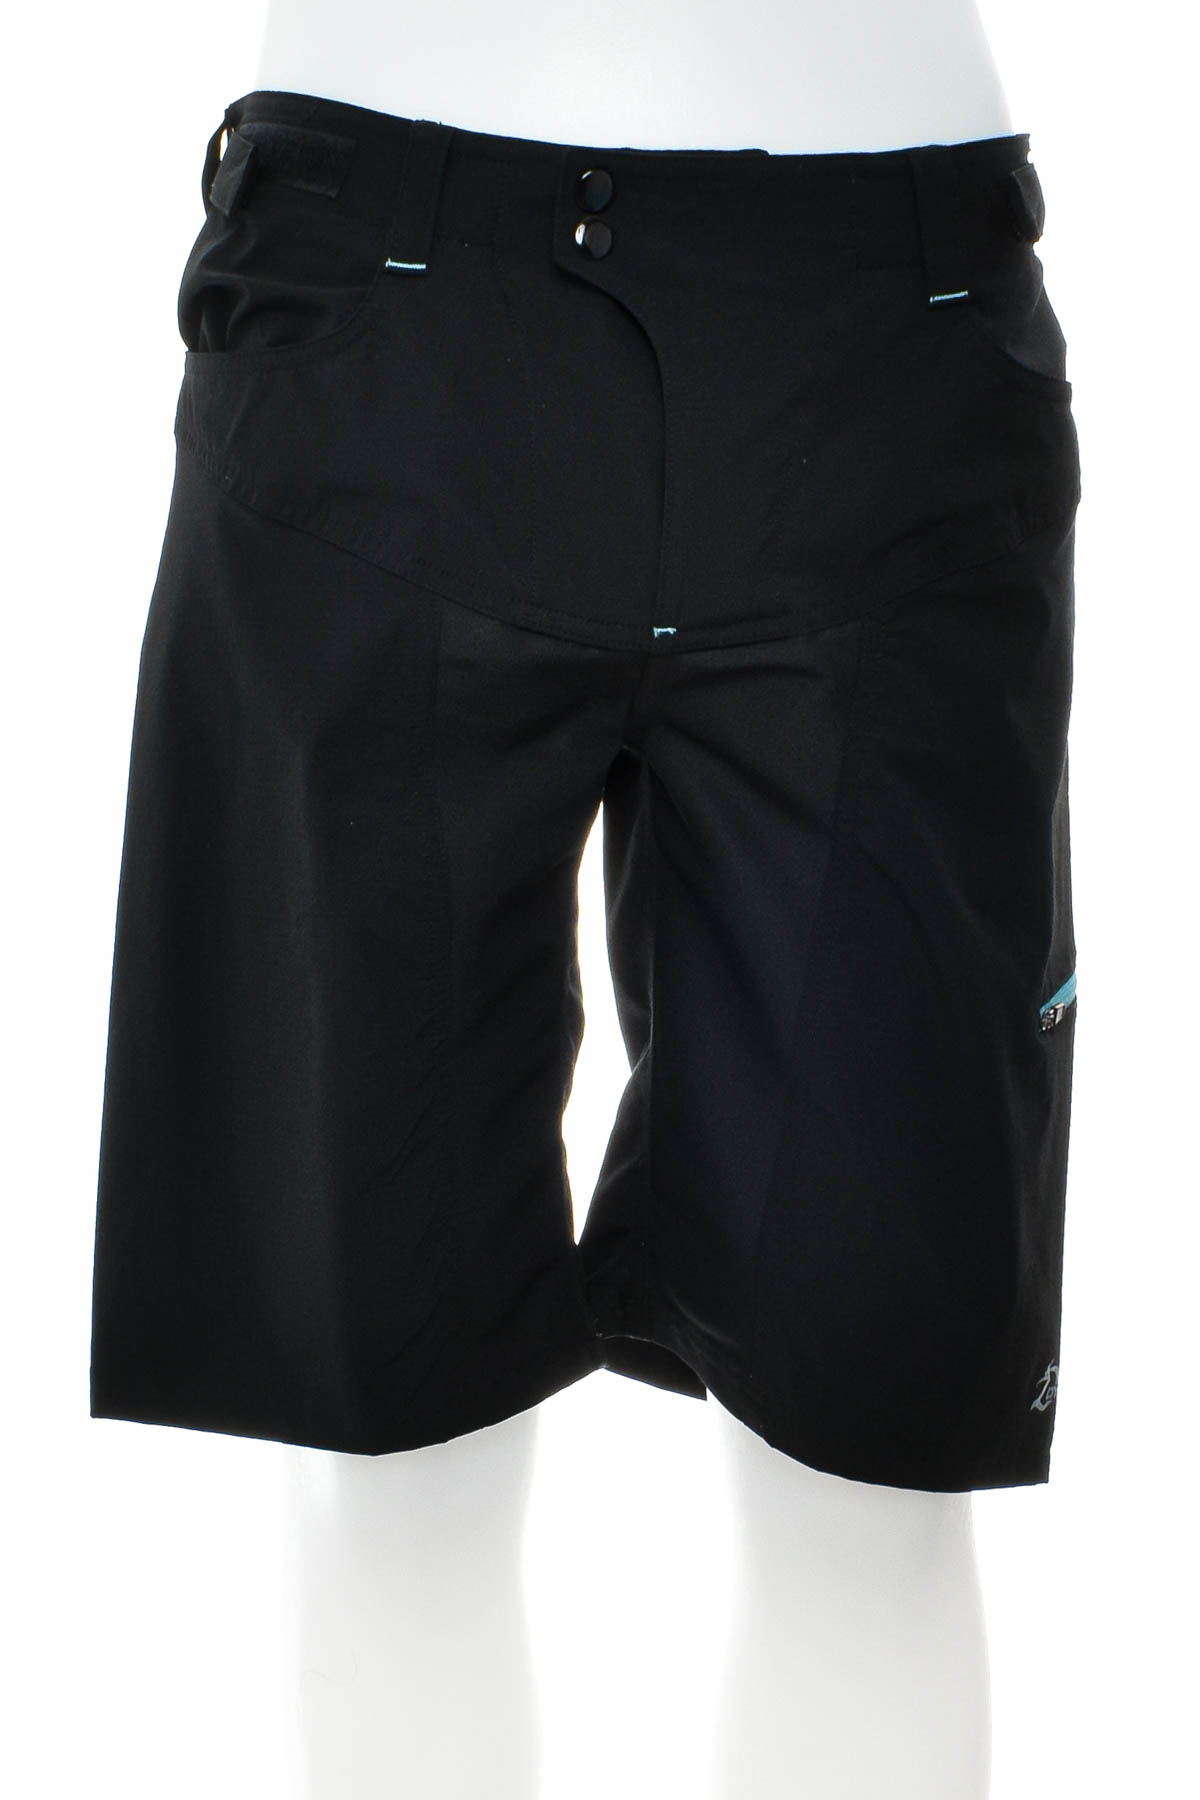 Men's shorts - DYNAMICS - 0